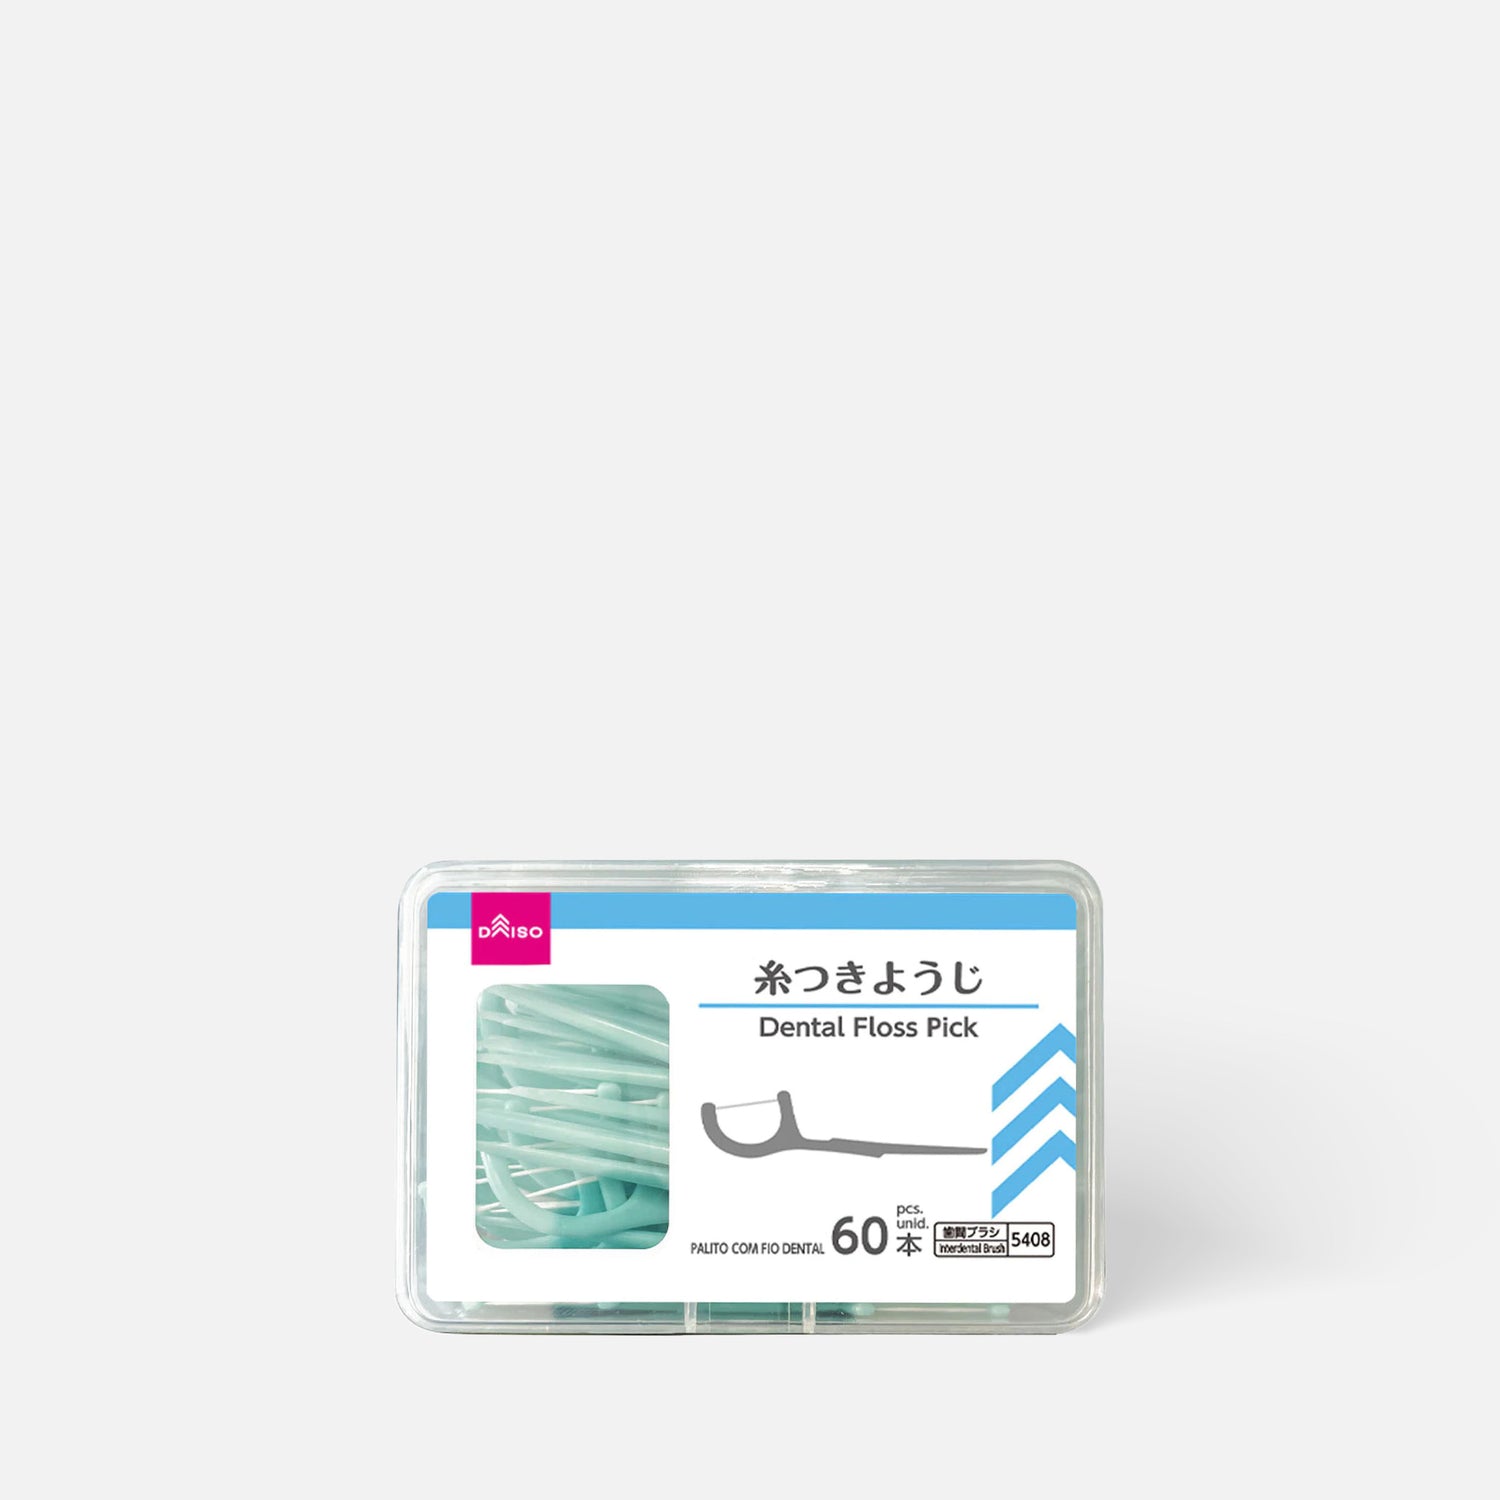 DAISO Dental Floss Pick 60pcs